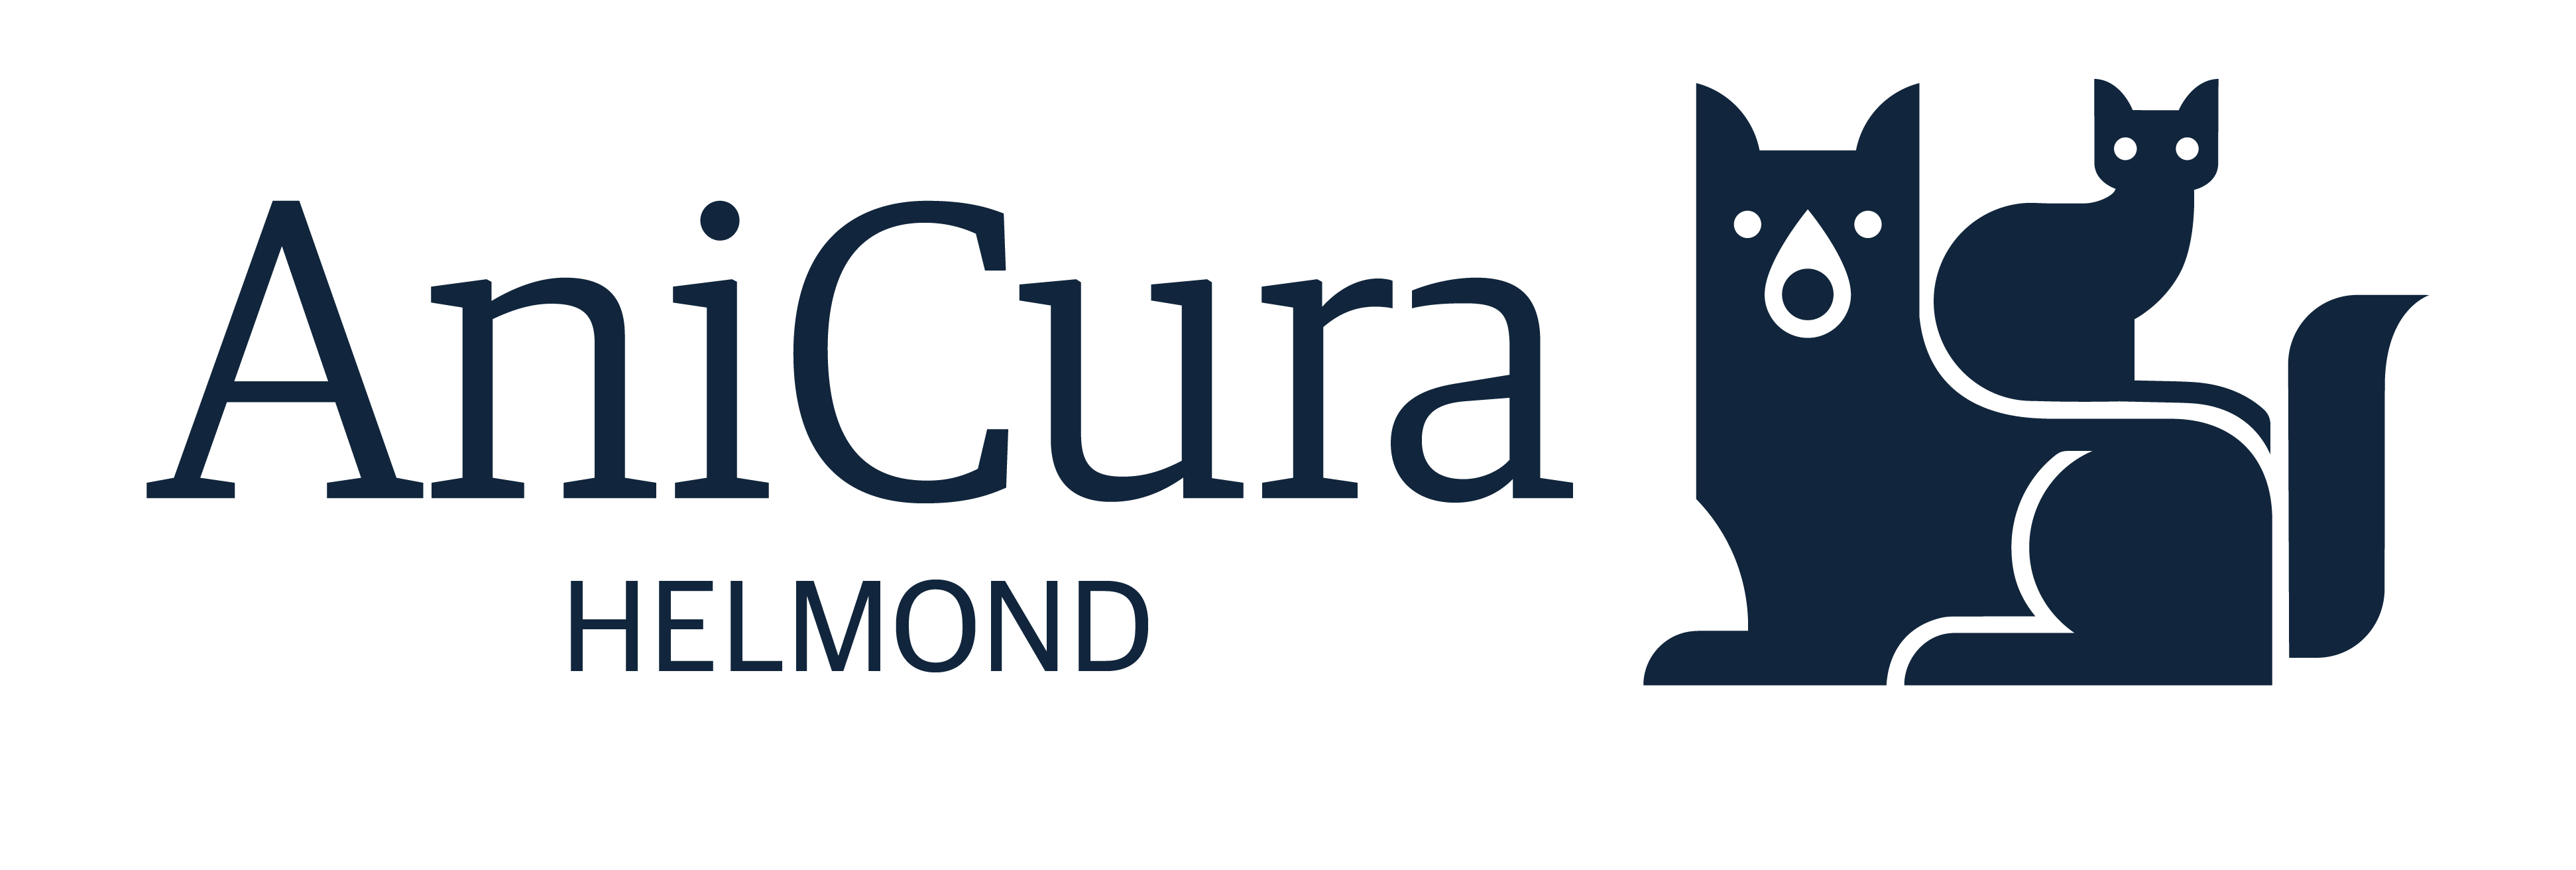 AniCura Helmond - Brouwhuis logo